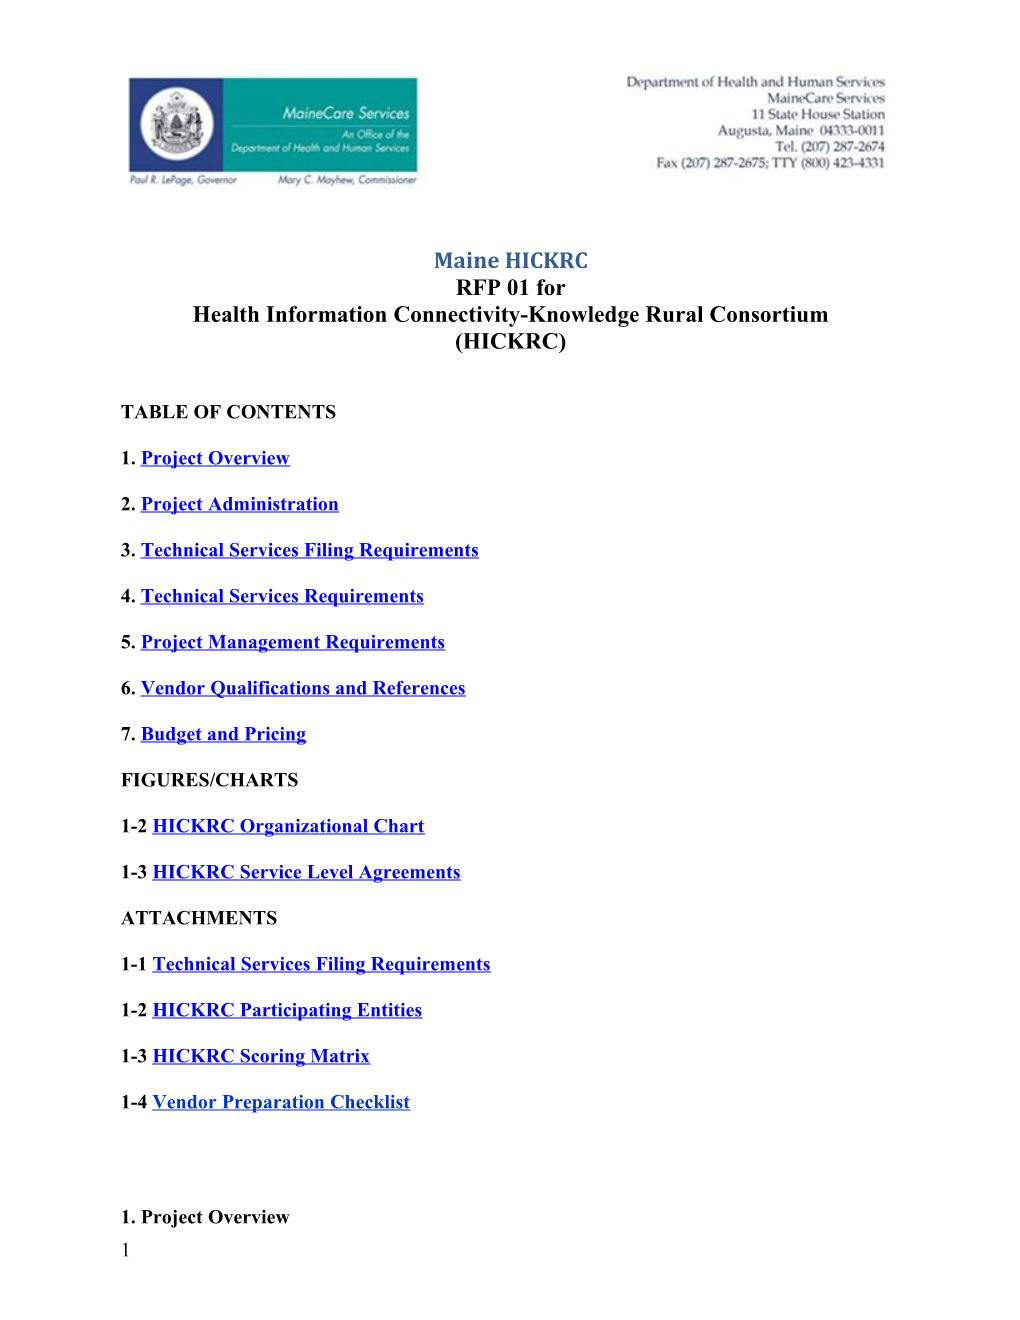 Health Information Connectivity-Knowledge Rural Consortium